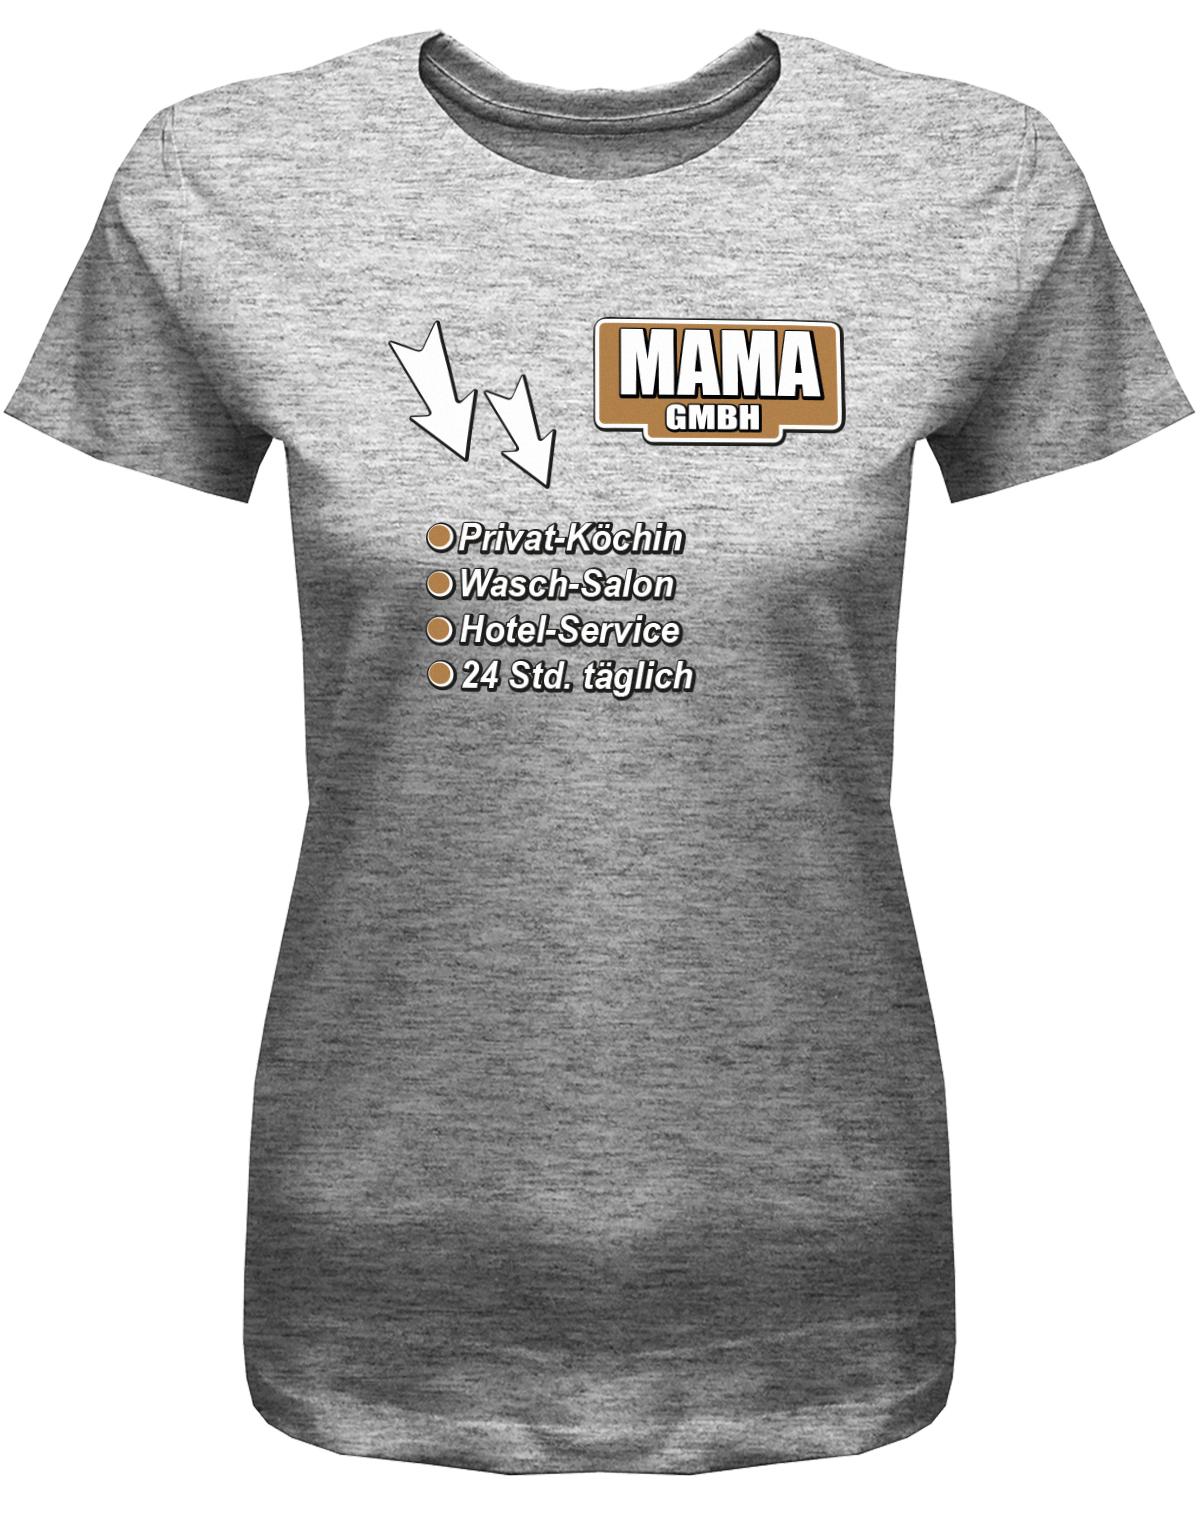 Mama-GmbH-Damen-Shirt-Grau